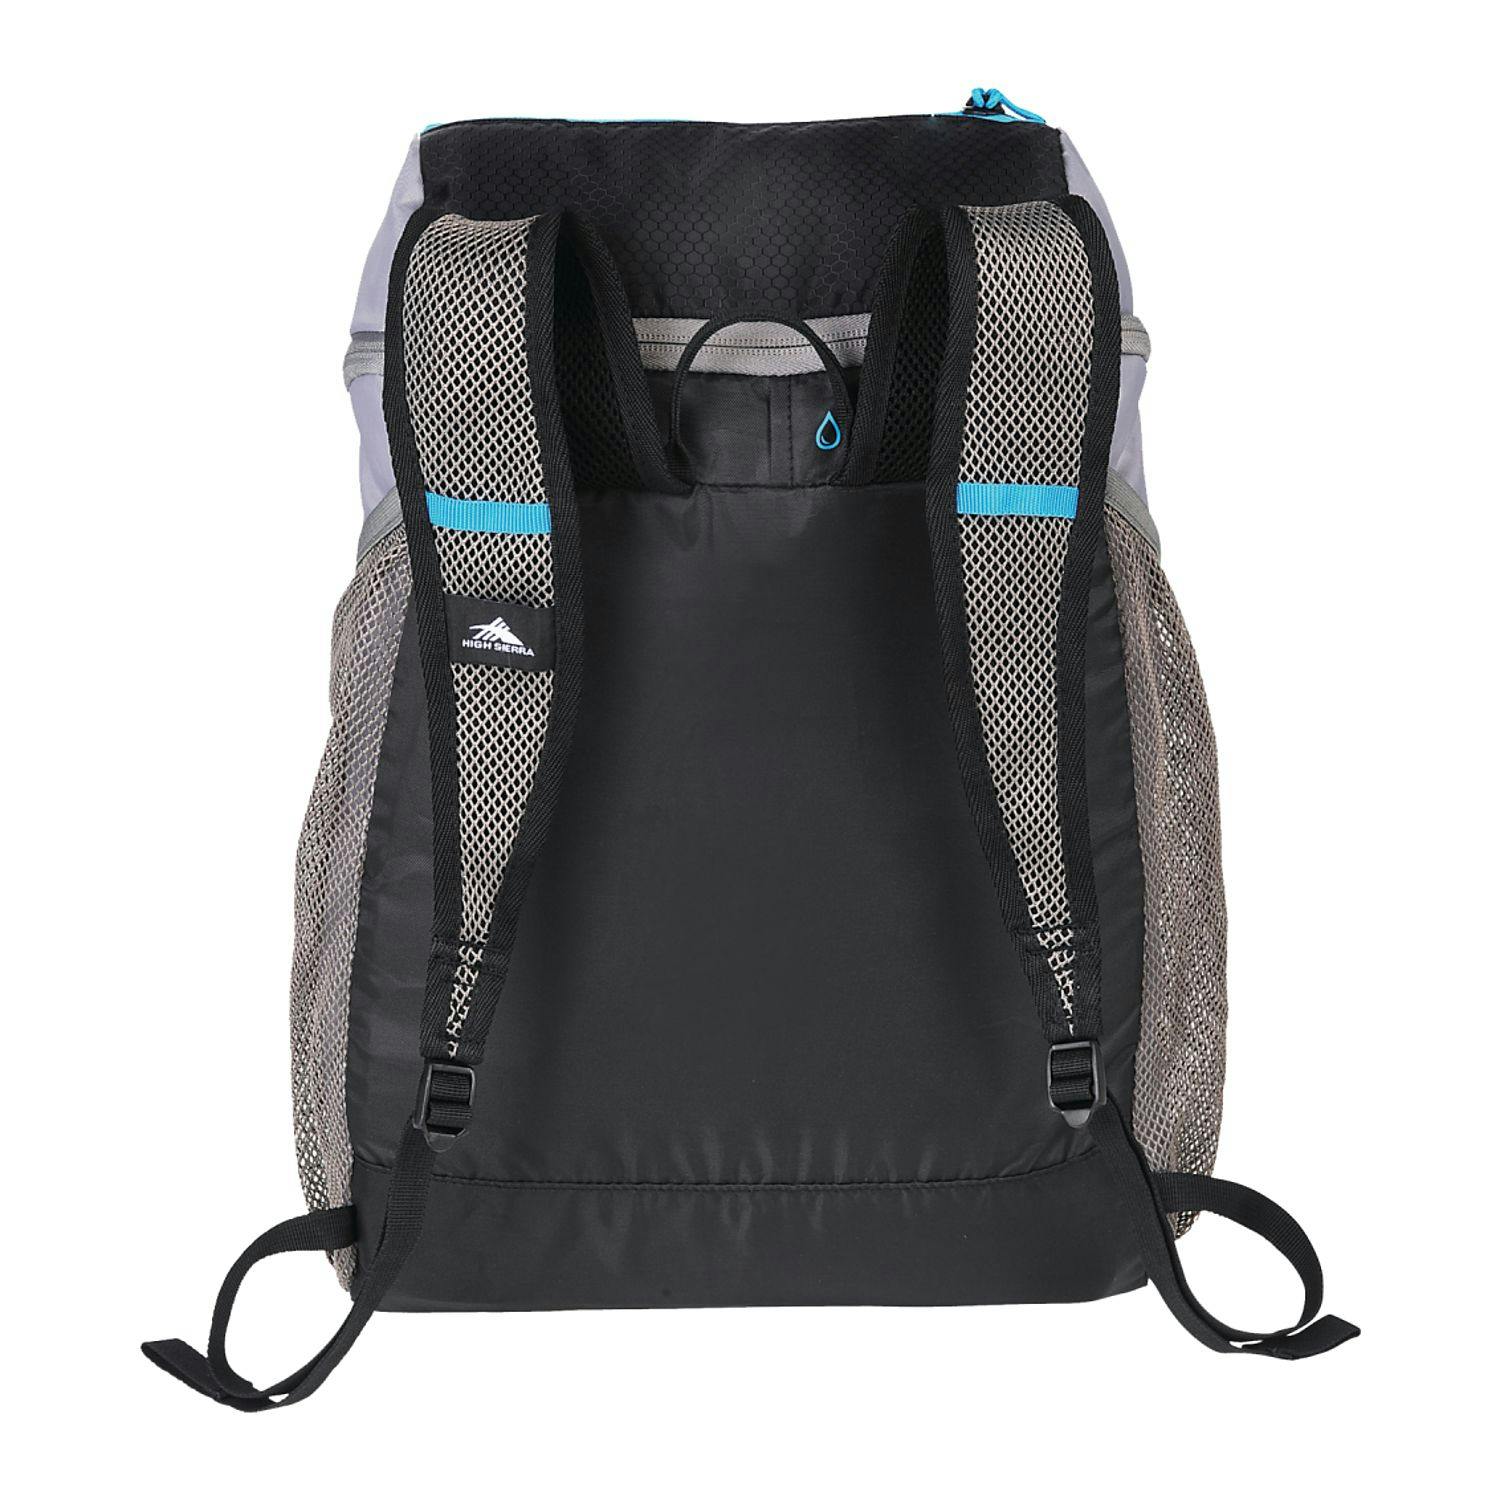 High Sierra Pack-n-Go Backpack - additional Image 4